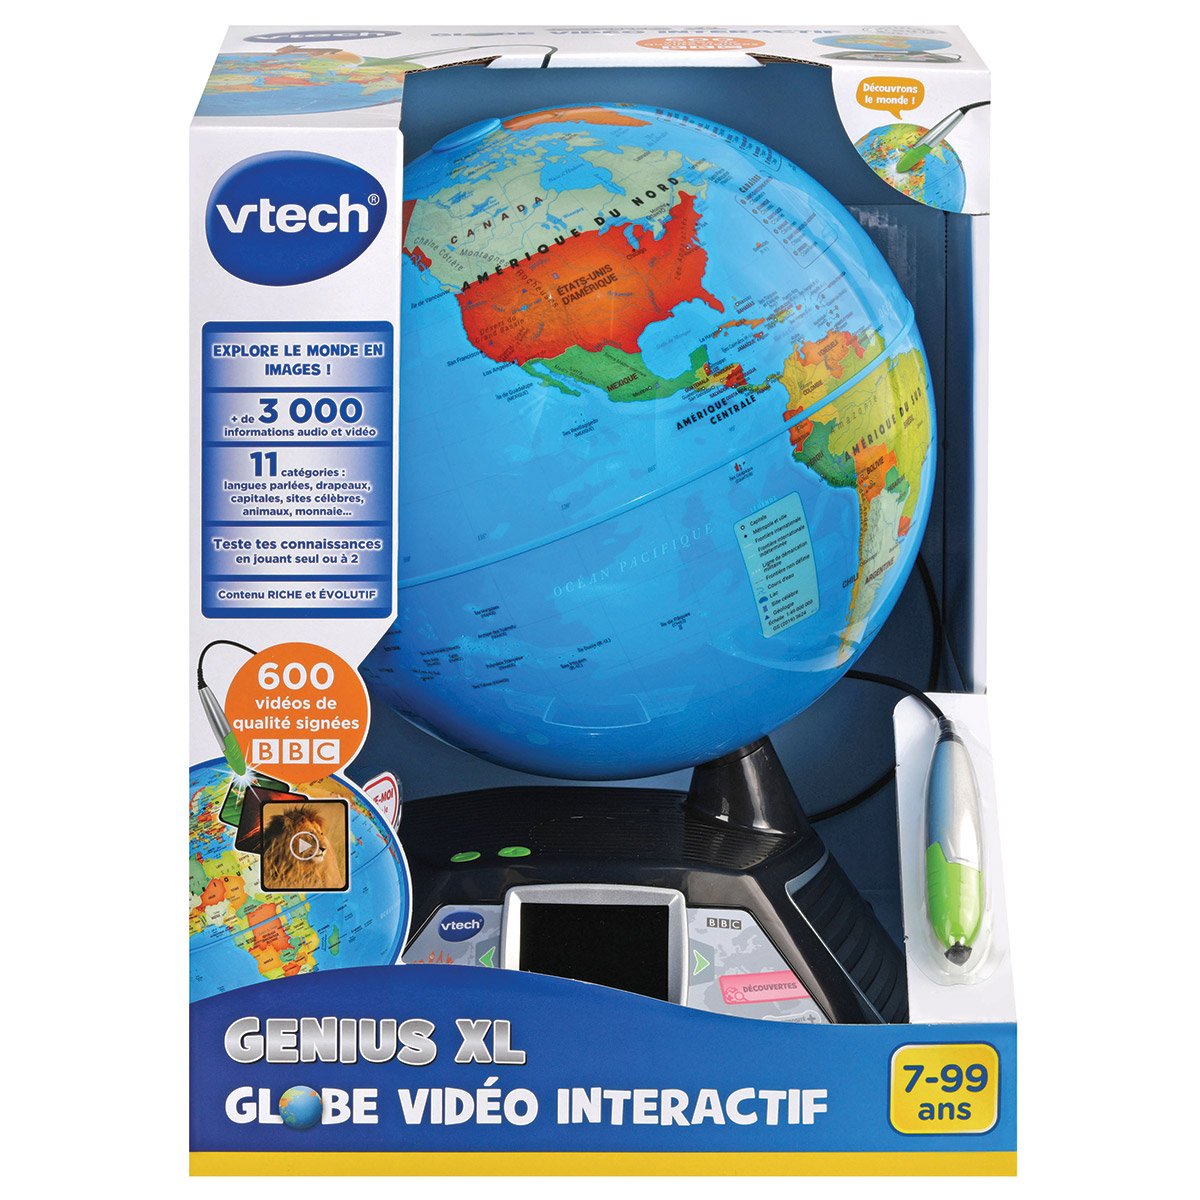 VTech - Genius XL – Globe Vidéo Interactif, Mapp…